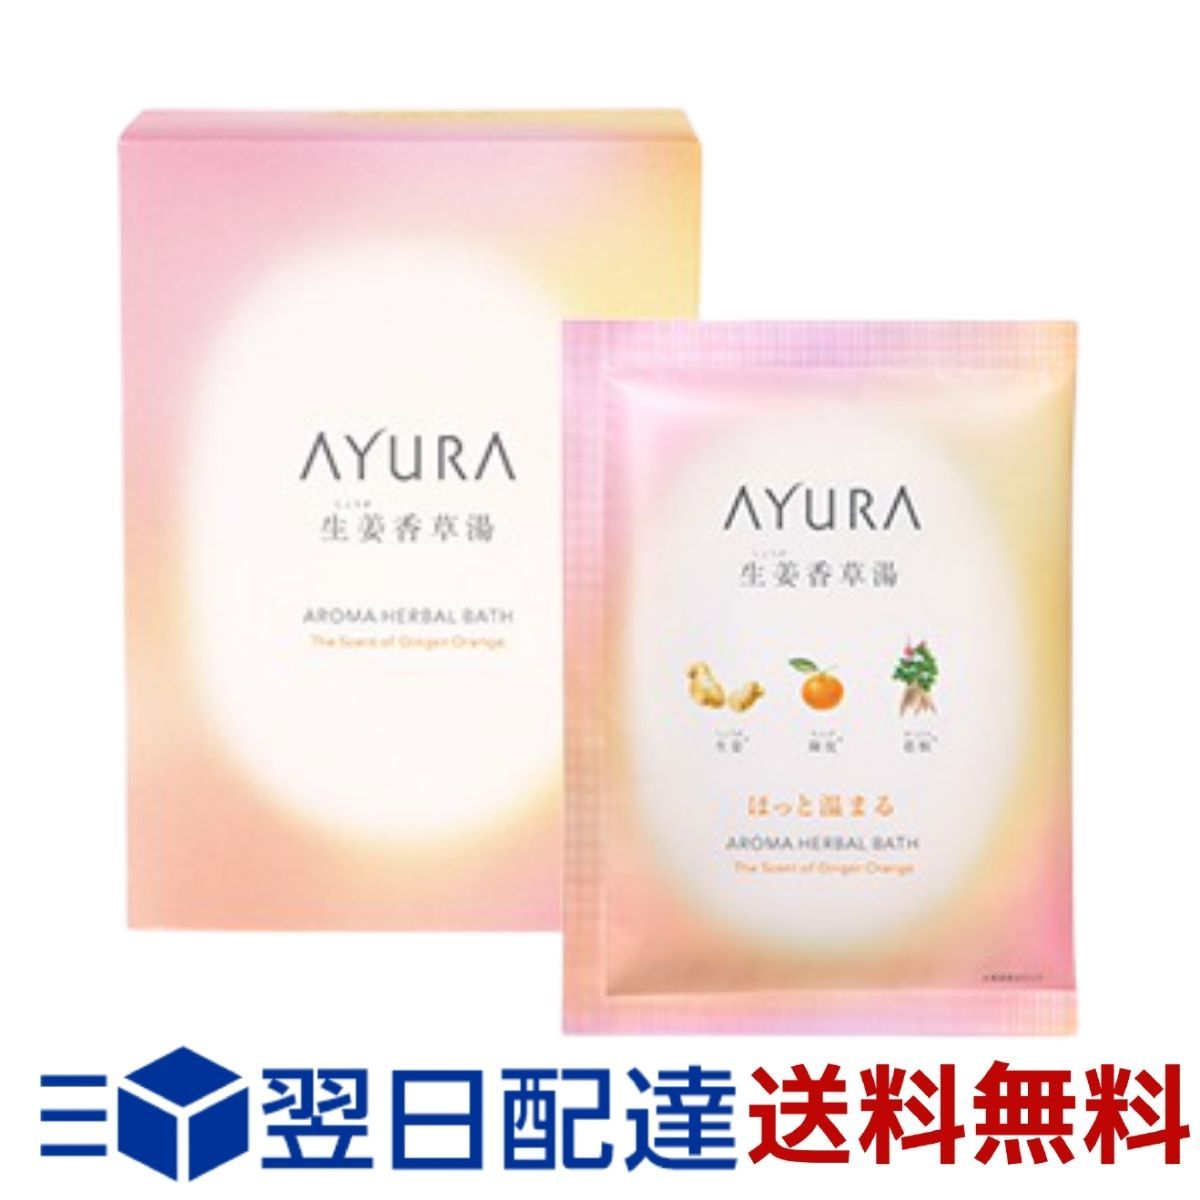 AYURA 生姜香草湯α 1箱 （8包入） 浴用入浴剤の商品画像